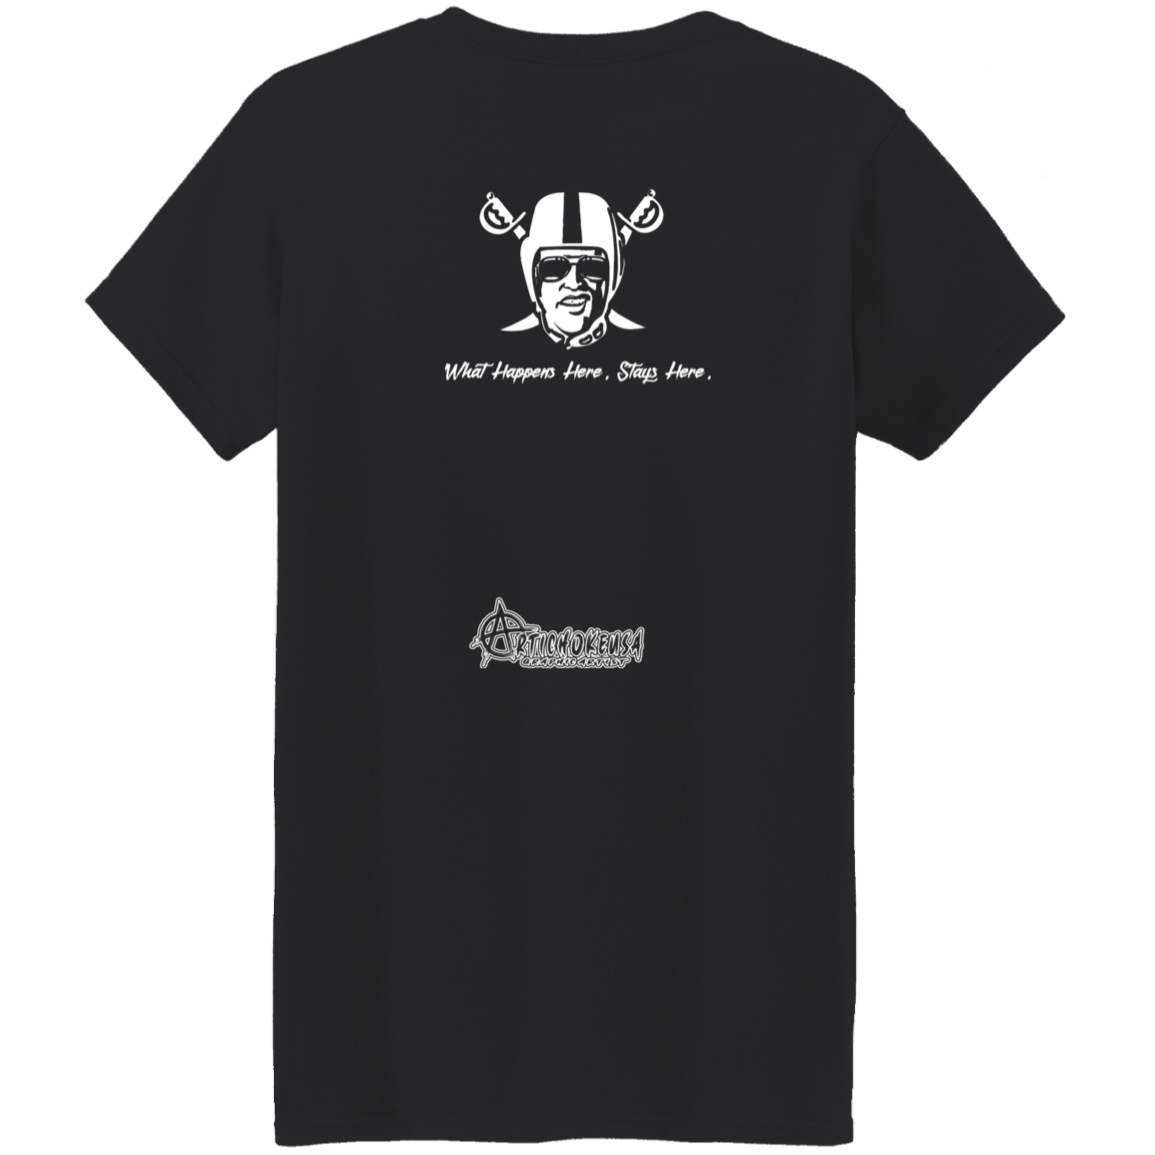 ArtichokeUSA Custom Design. Las Vegas Raiders. Las Vegas / Elvis Presley Parody Fan Art. Let's Create Your Own Team Design Today. Ladies' 5.3 oz. T-Shirt